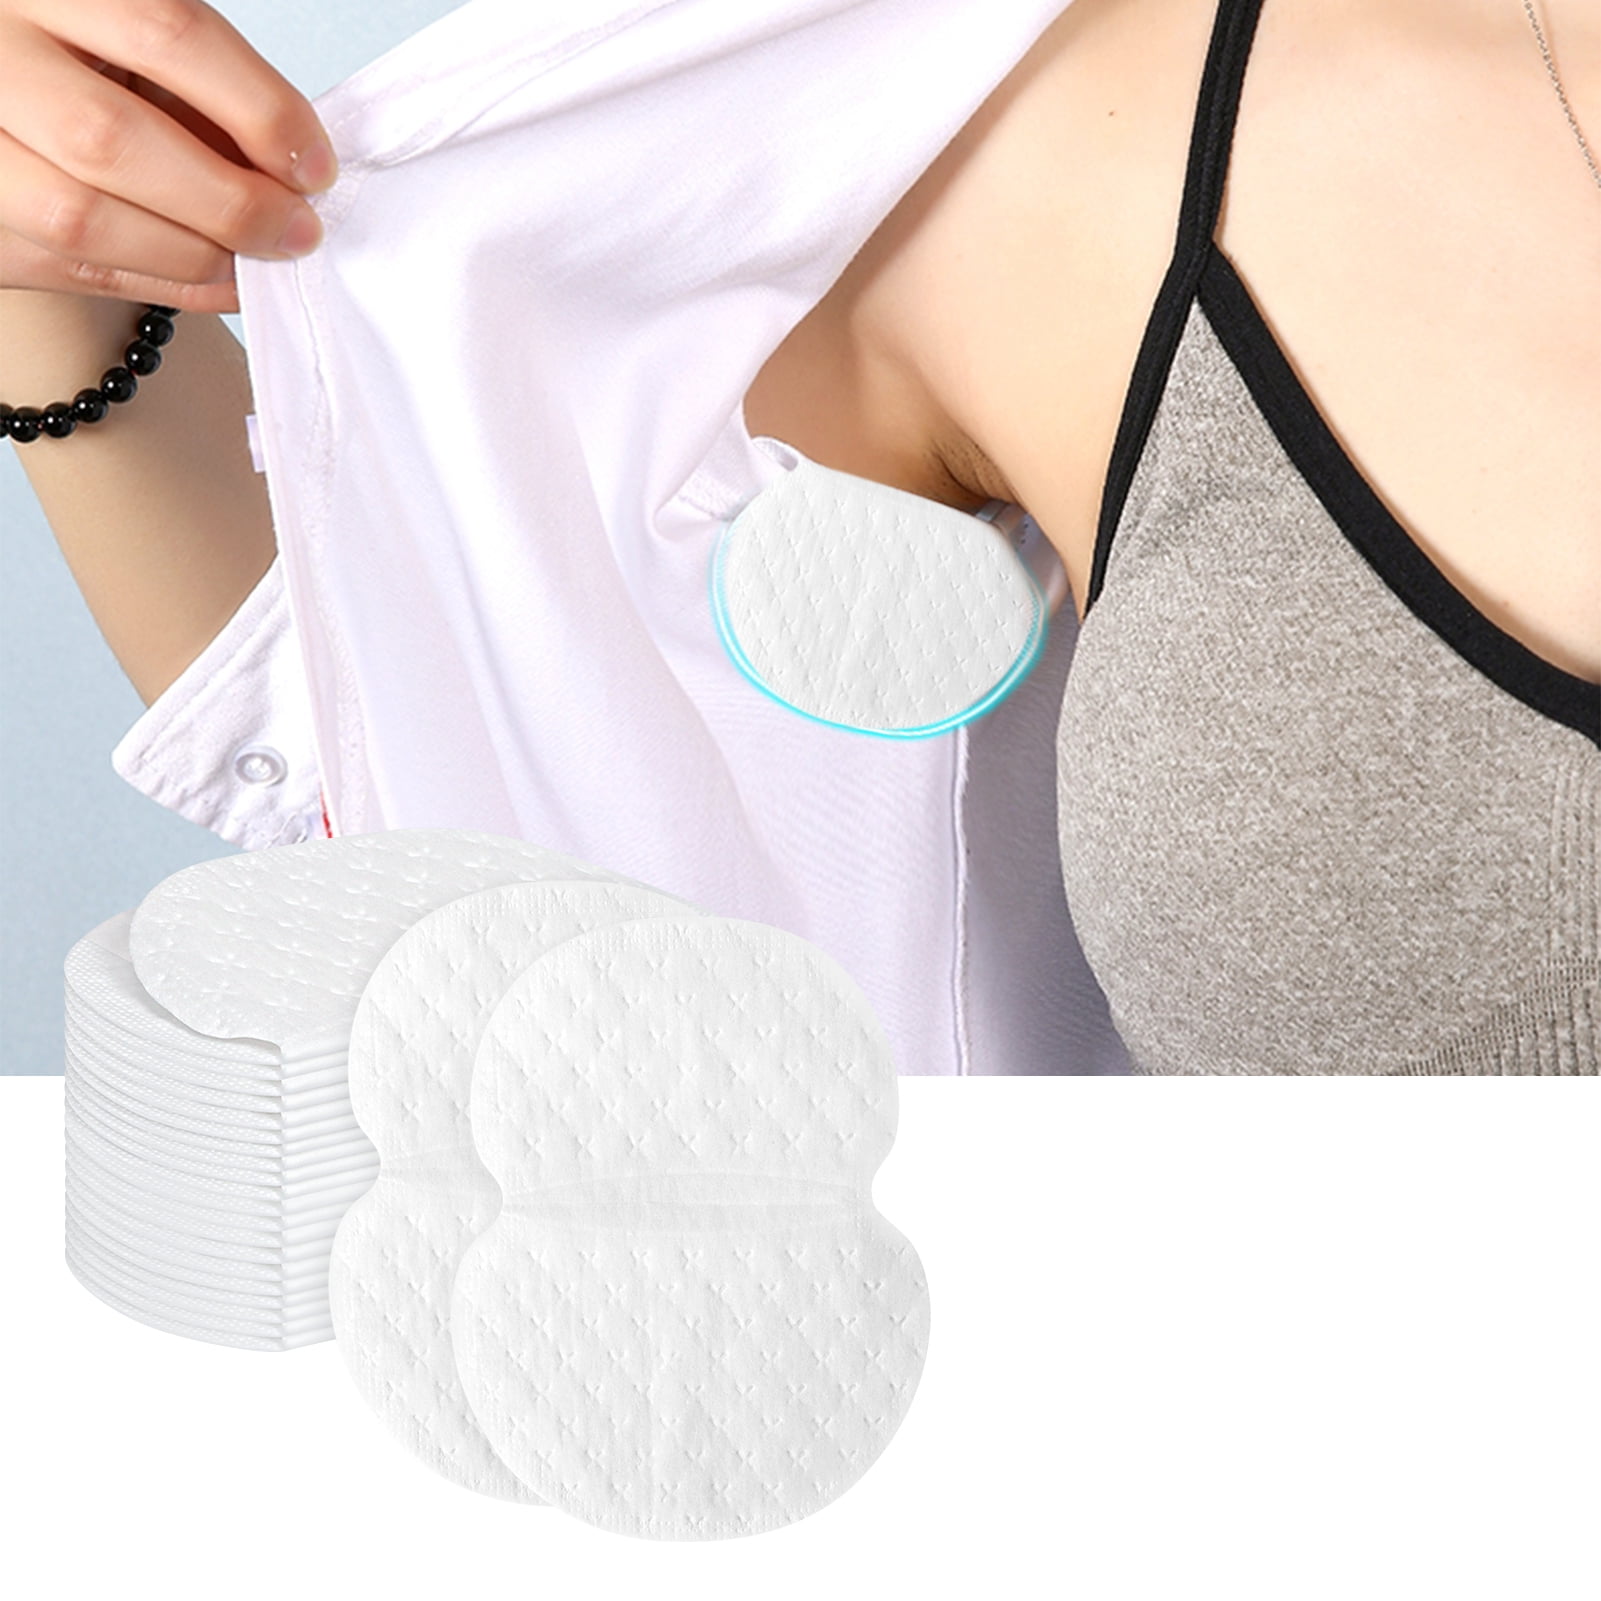 Toplive Armpit Sweat Pads ,[100 Pack] Disposable Underarm Sweat